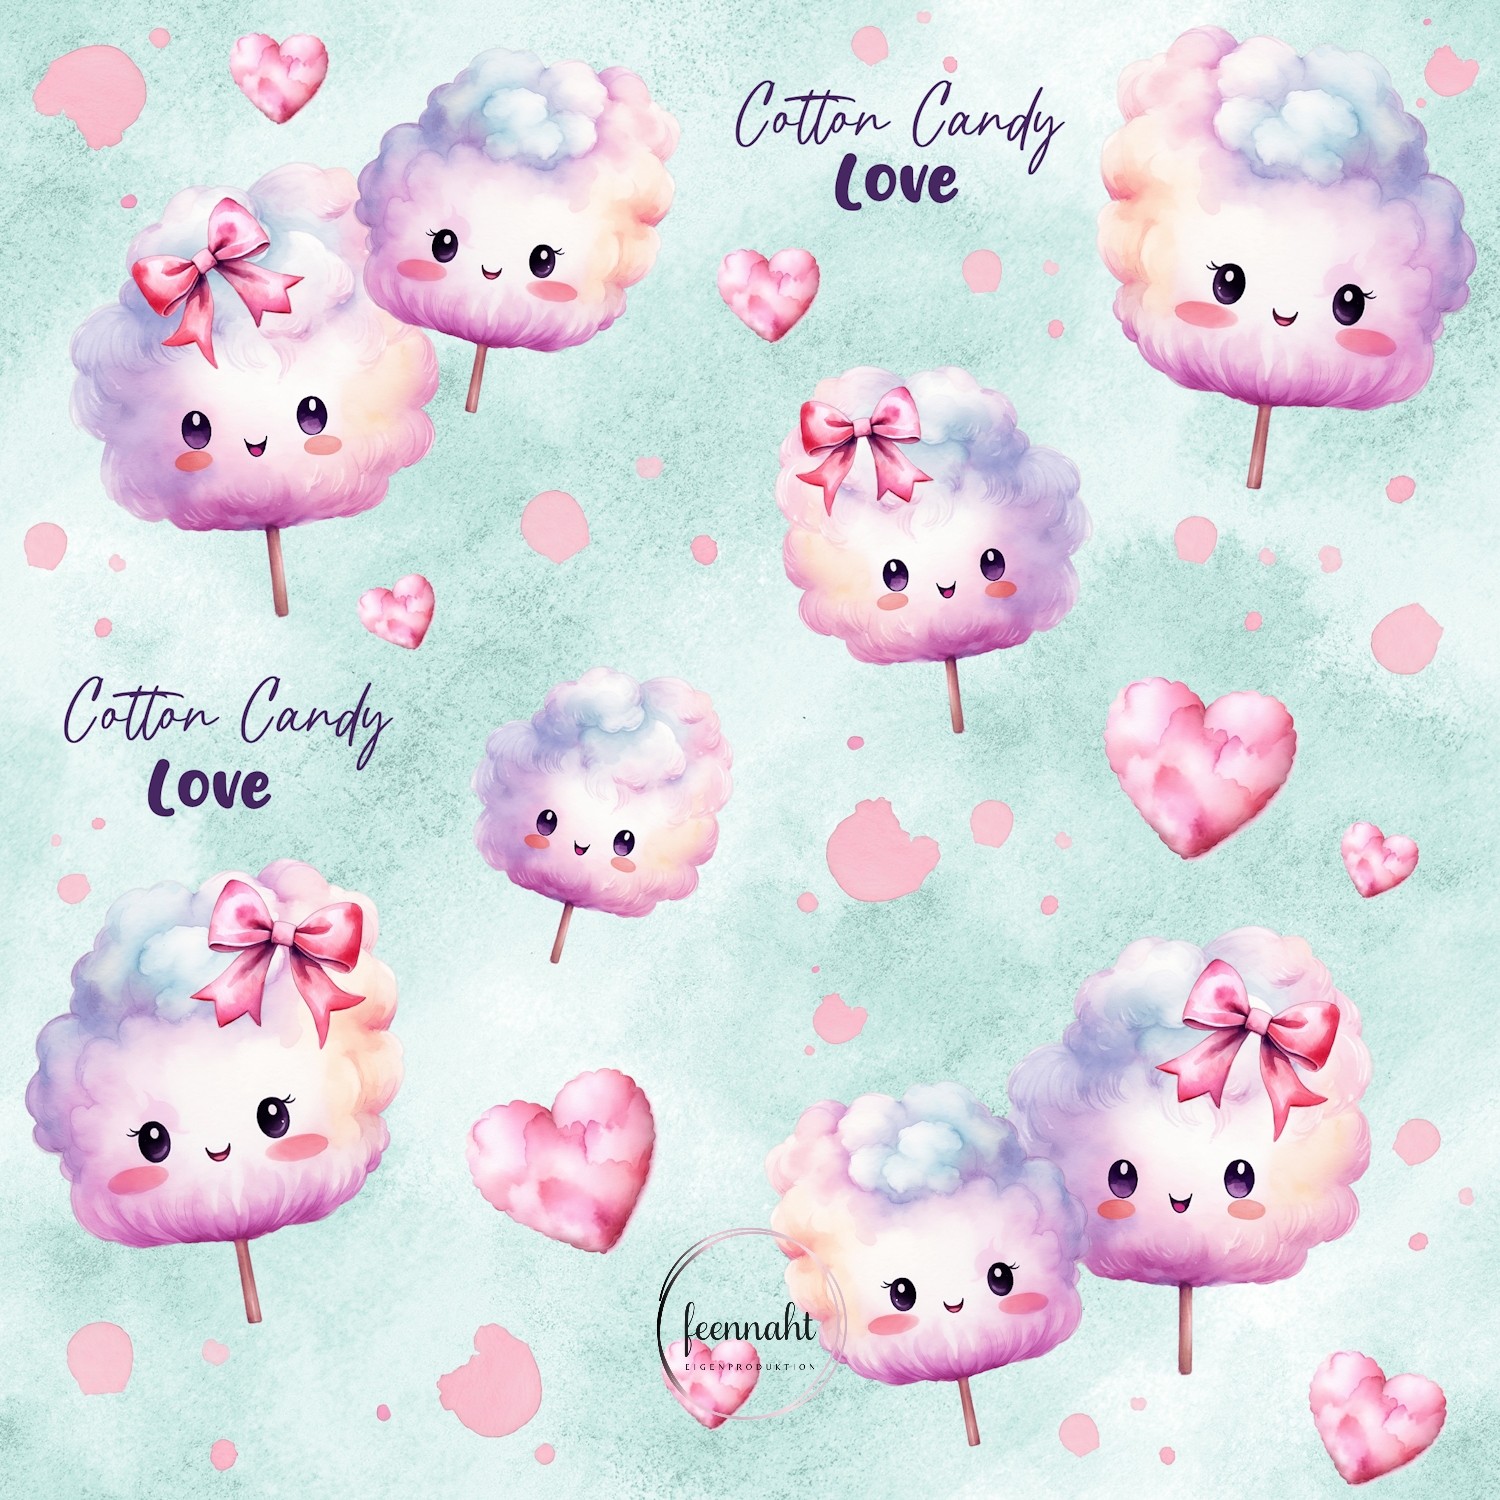 Vorbestellung - Jersey o French Terry / 2300 EUR/m - Eigenproduktion - cotton candy love